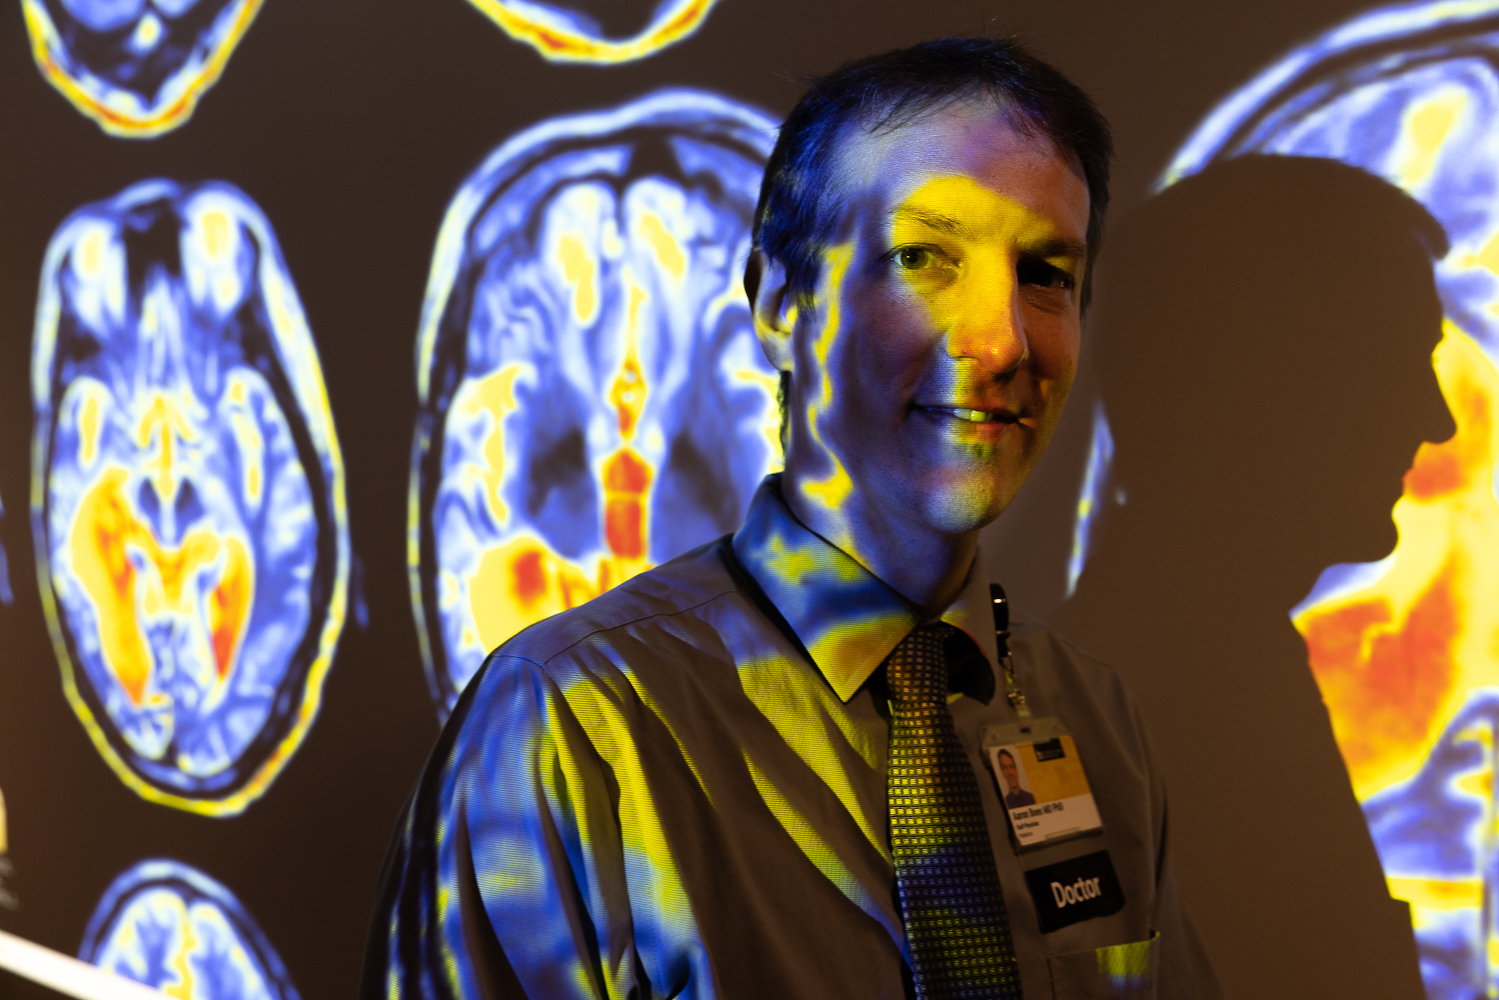 UI professor Dr. Aaron Boes studies the impact brain lesions has on addiction.